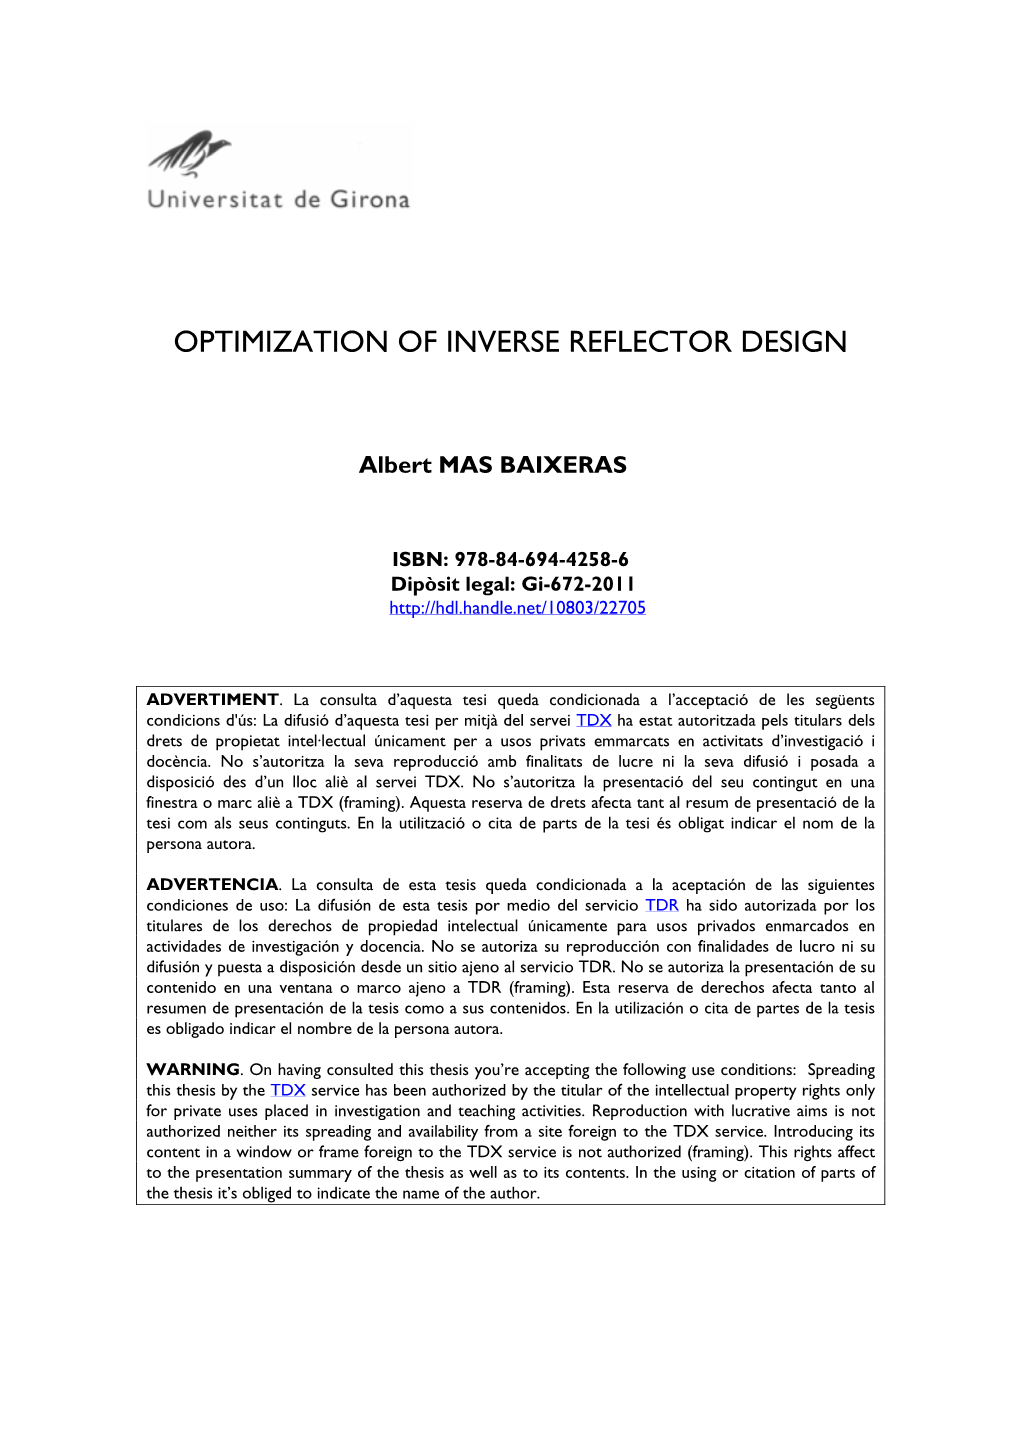 Optimization of Inverse Reflector Design